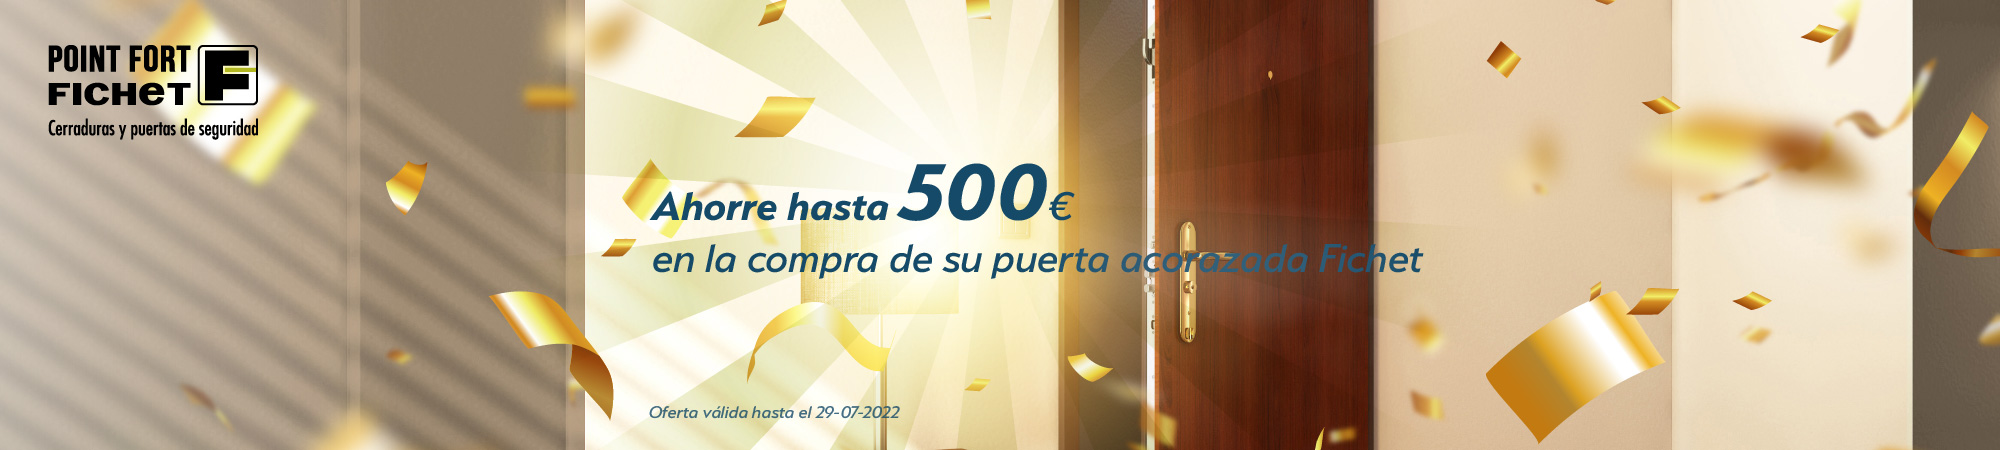 Plan renove de puertas Fichet Oferta 500€ Continox Fichet Madrid